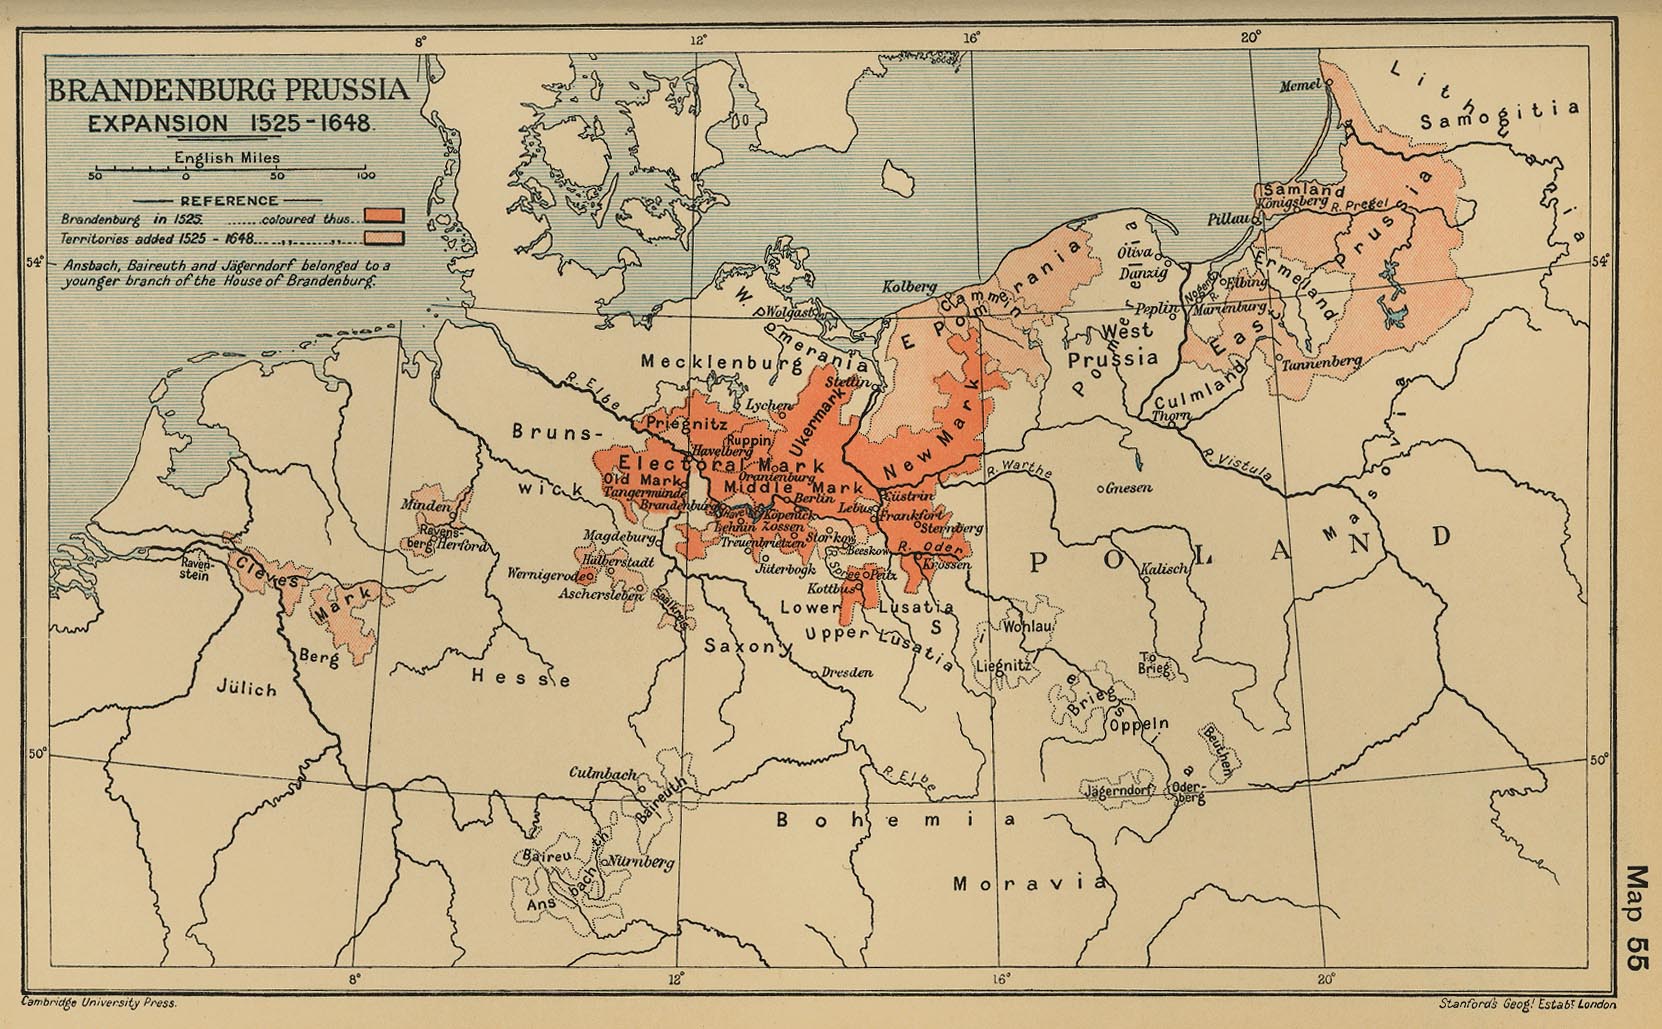 Map of Brandenburg Prussia Expansion 1525-1648